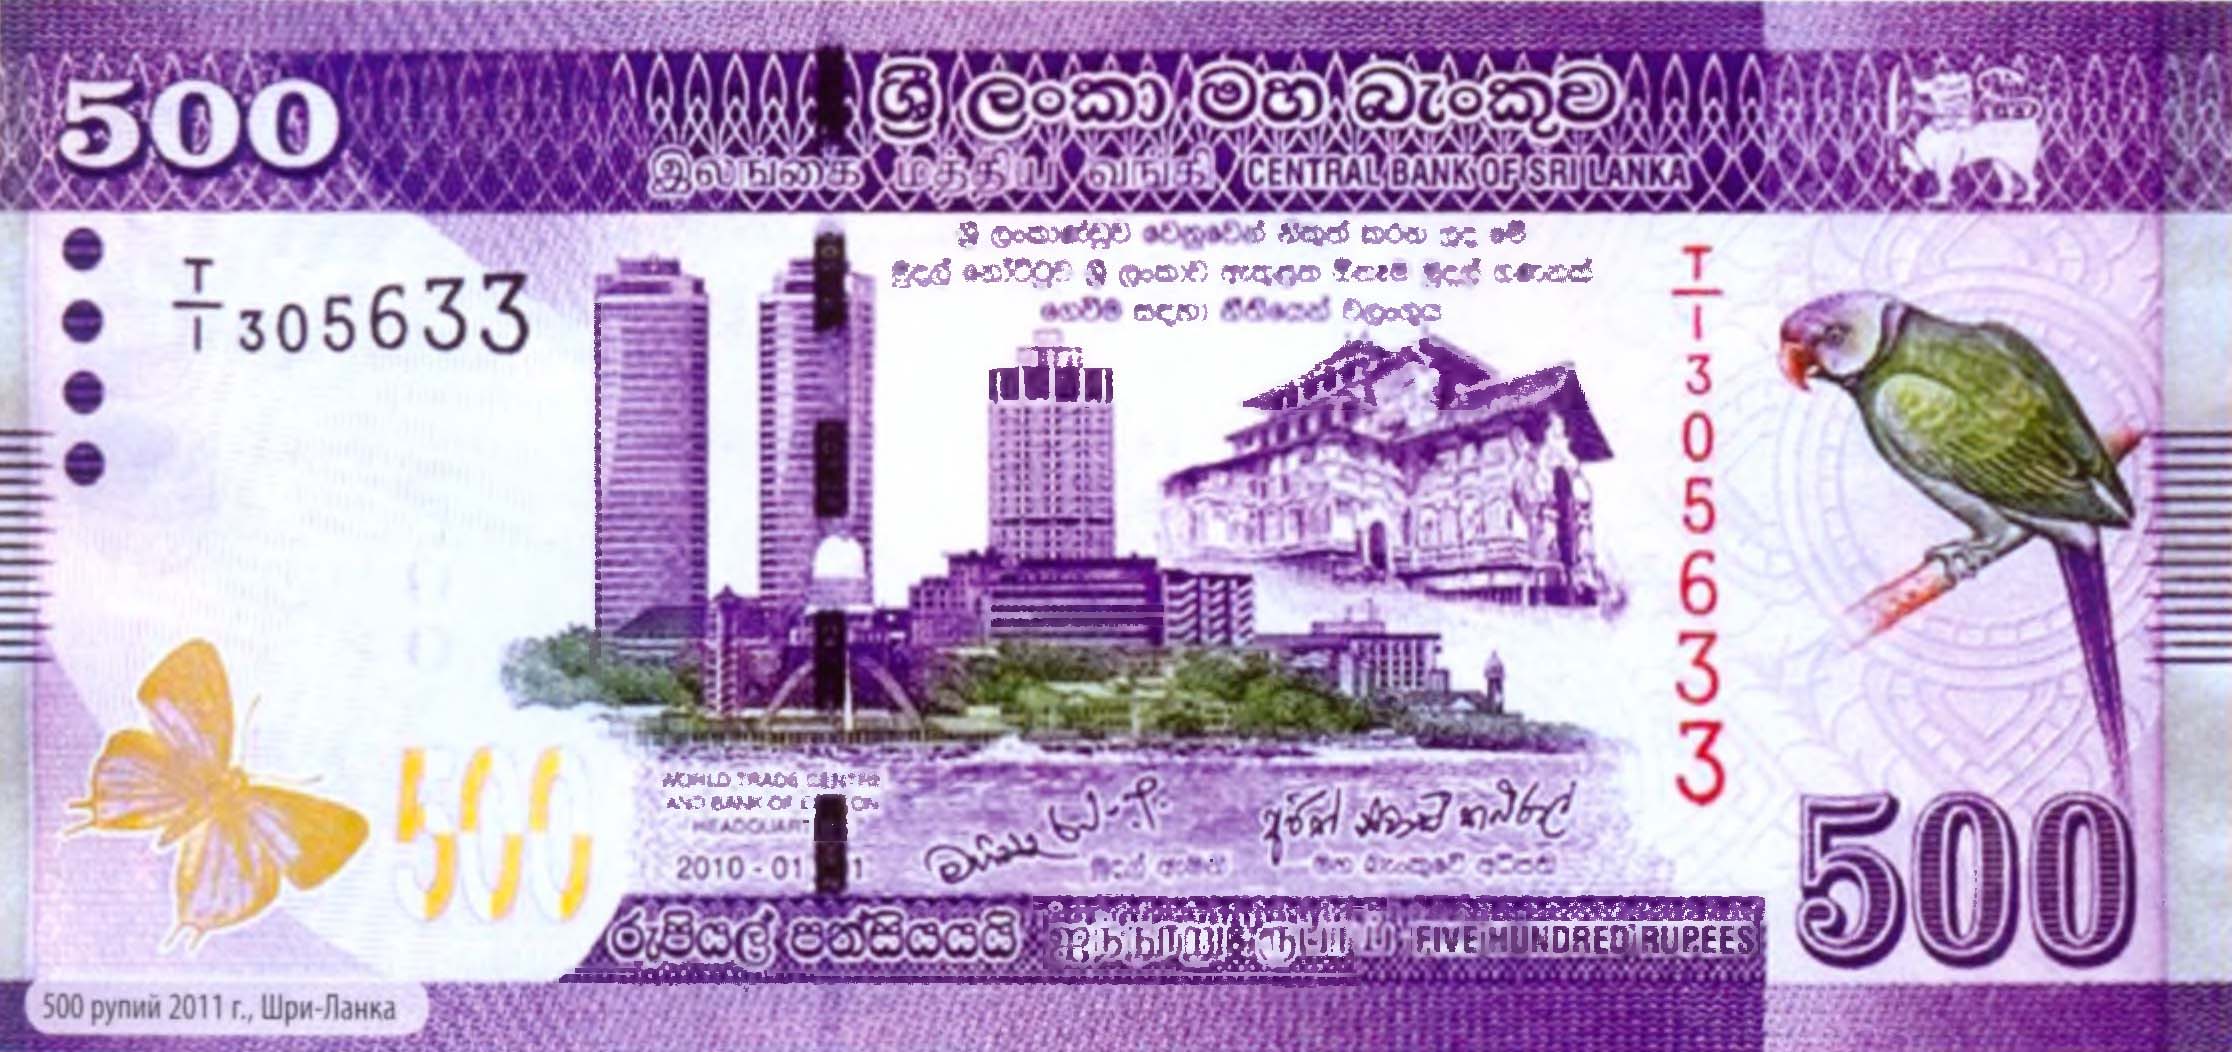 500 рупий 2011 г., Шри-Ланка.